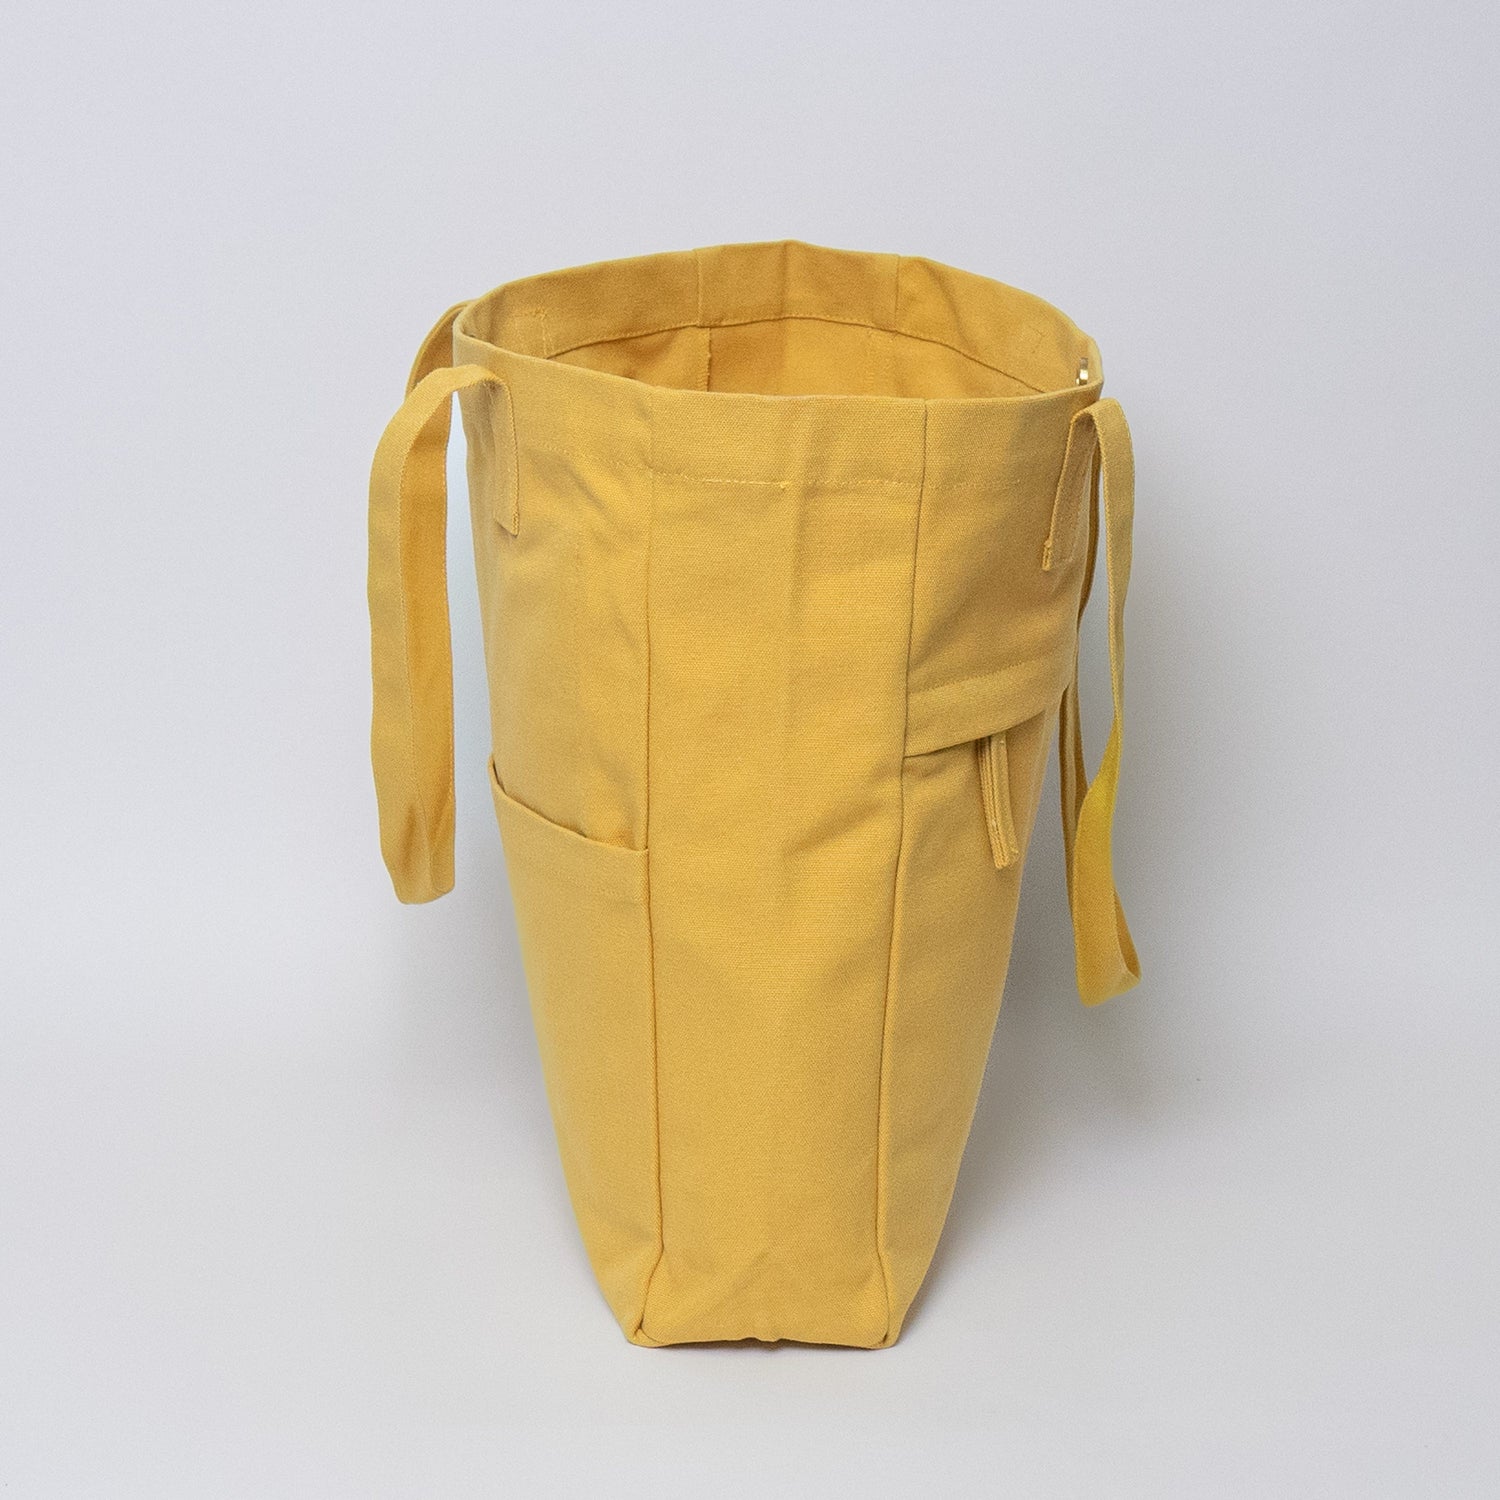 Large Solid Simply Tote Bag in Cloud Grey